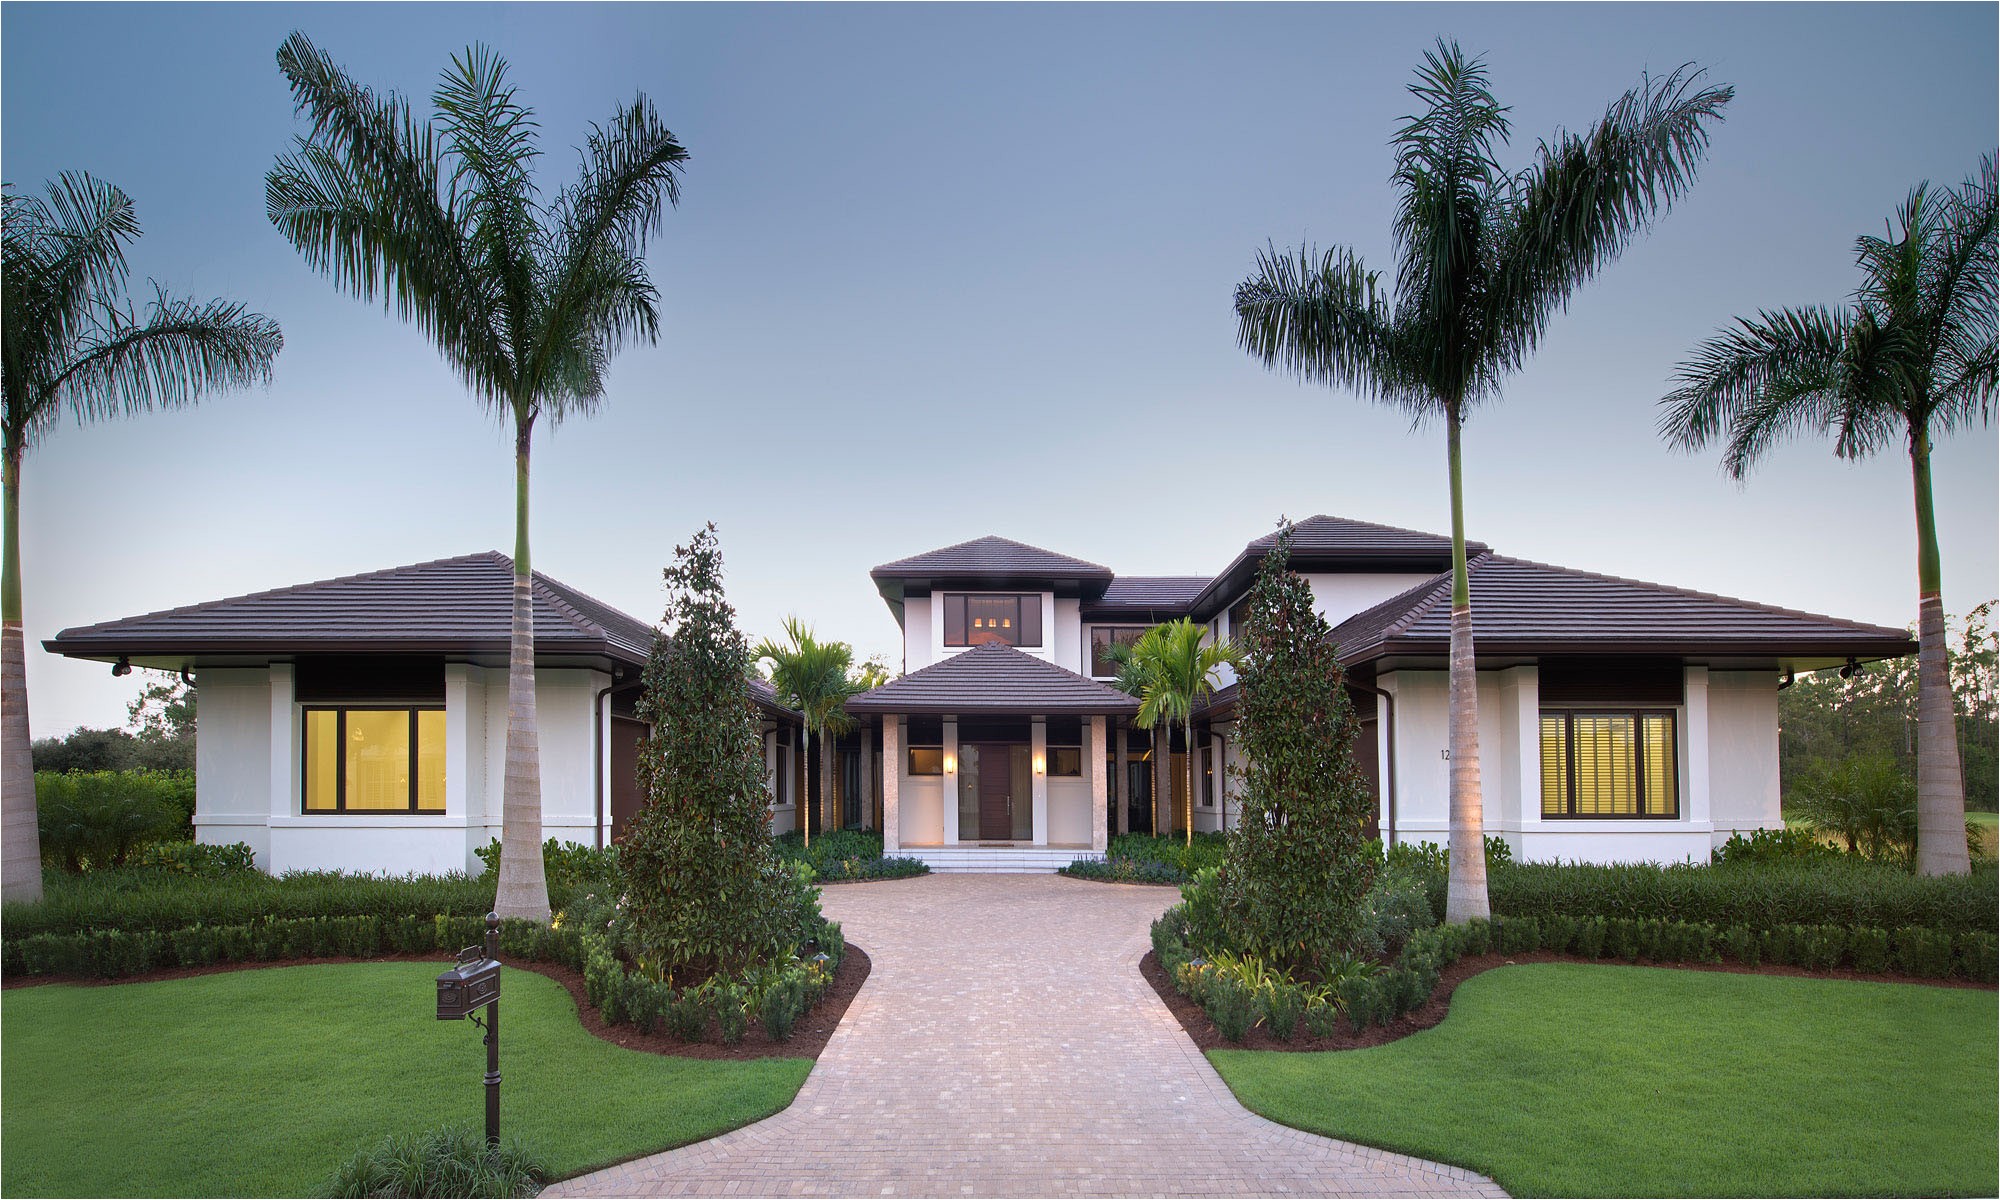 custom dream home in florida with elegant swimming pool